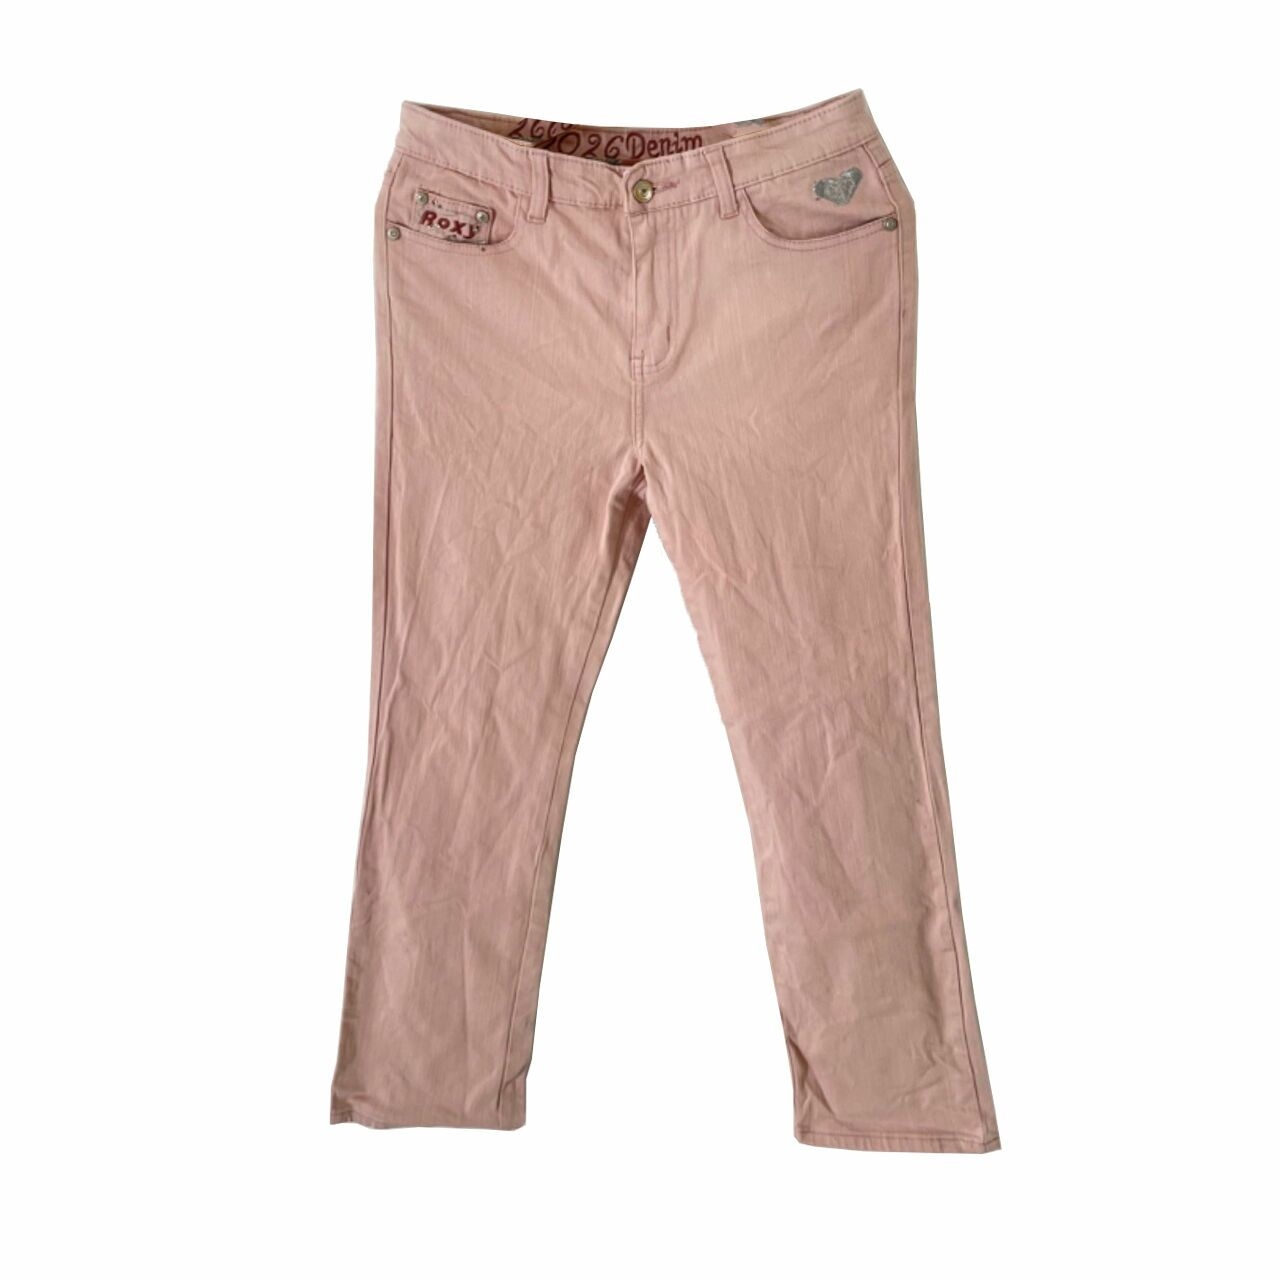 Roxy Pink Long Pants